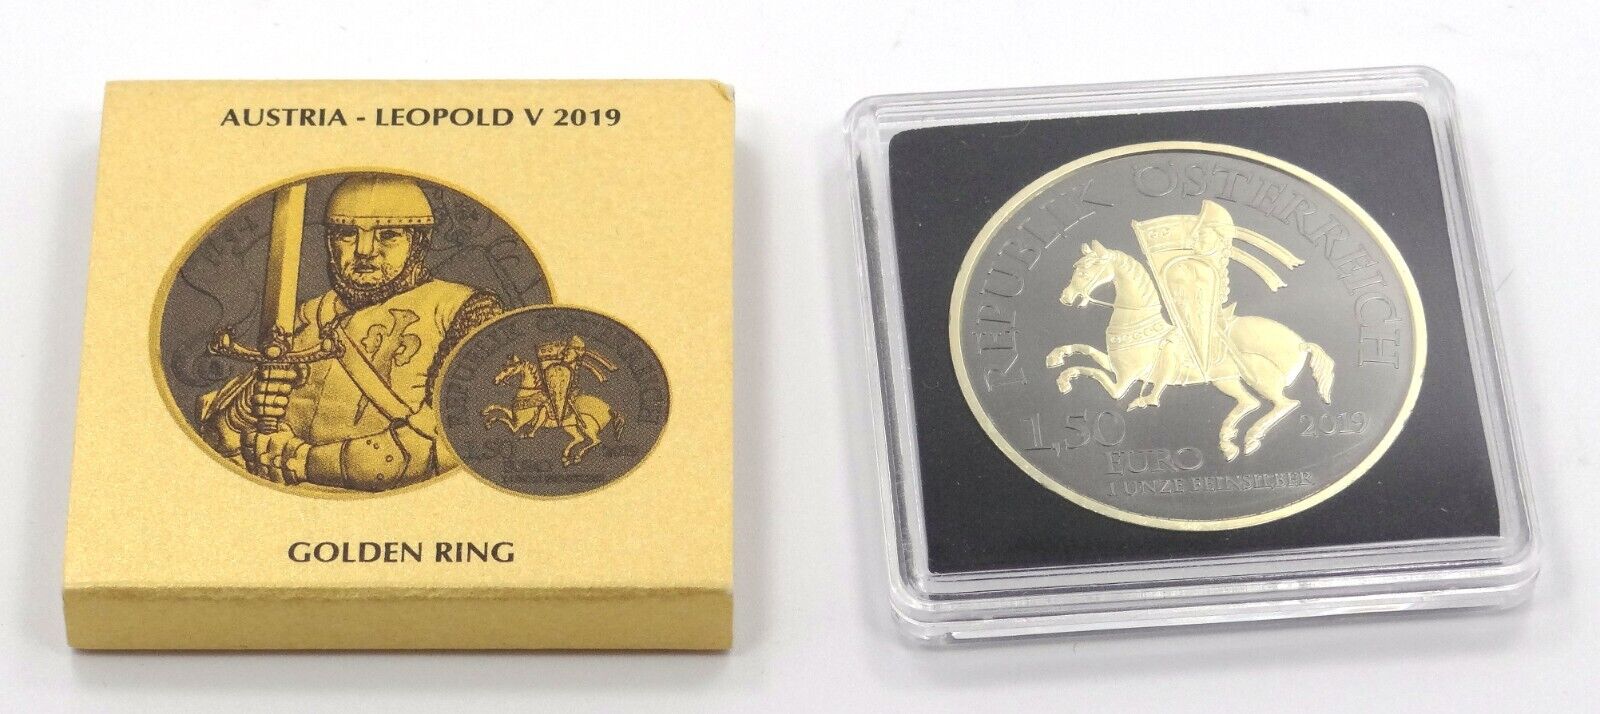 1 Oz Silver Coin 2019 1.5 Euro Austria Golden Ring Gold & Ruthenium Leopold V-classypw.com-6